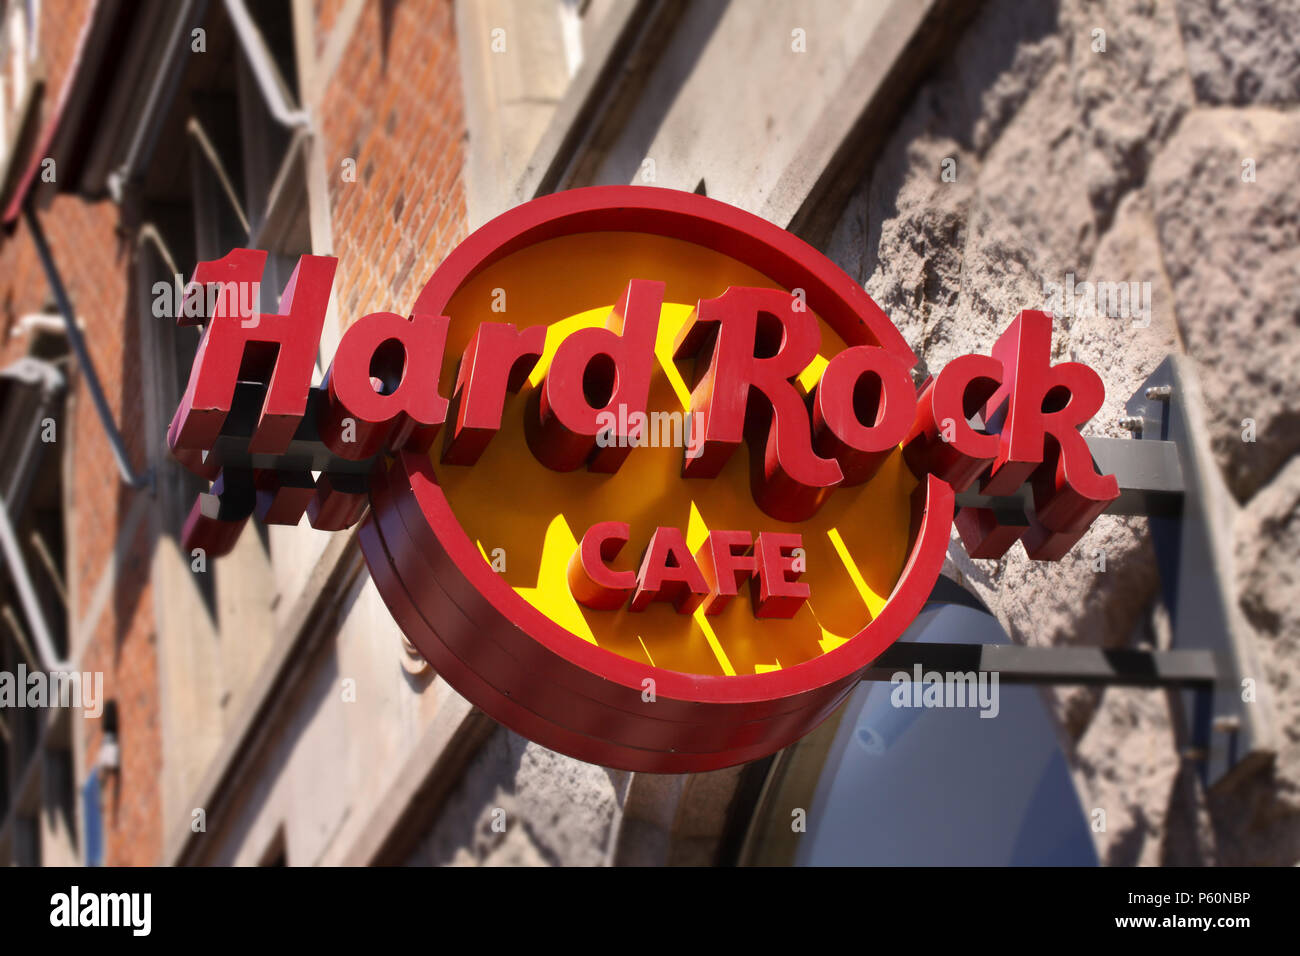 Copenhagen, Denmark - June 26, 2018: Hard Rock Cafe Inc. is a chain of theme restaurants founded in 1971, Restaurant sign on building Stock Photo